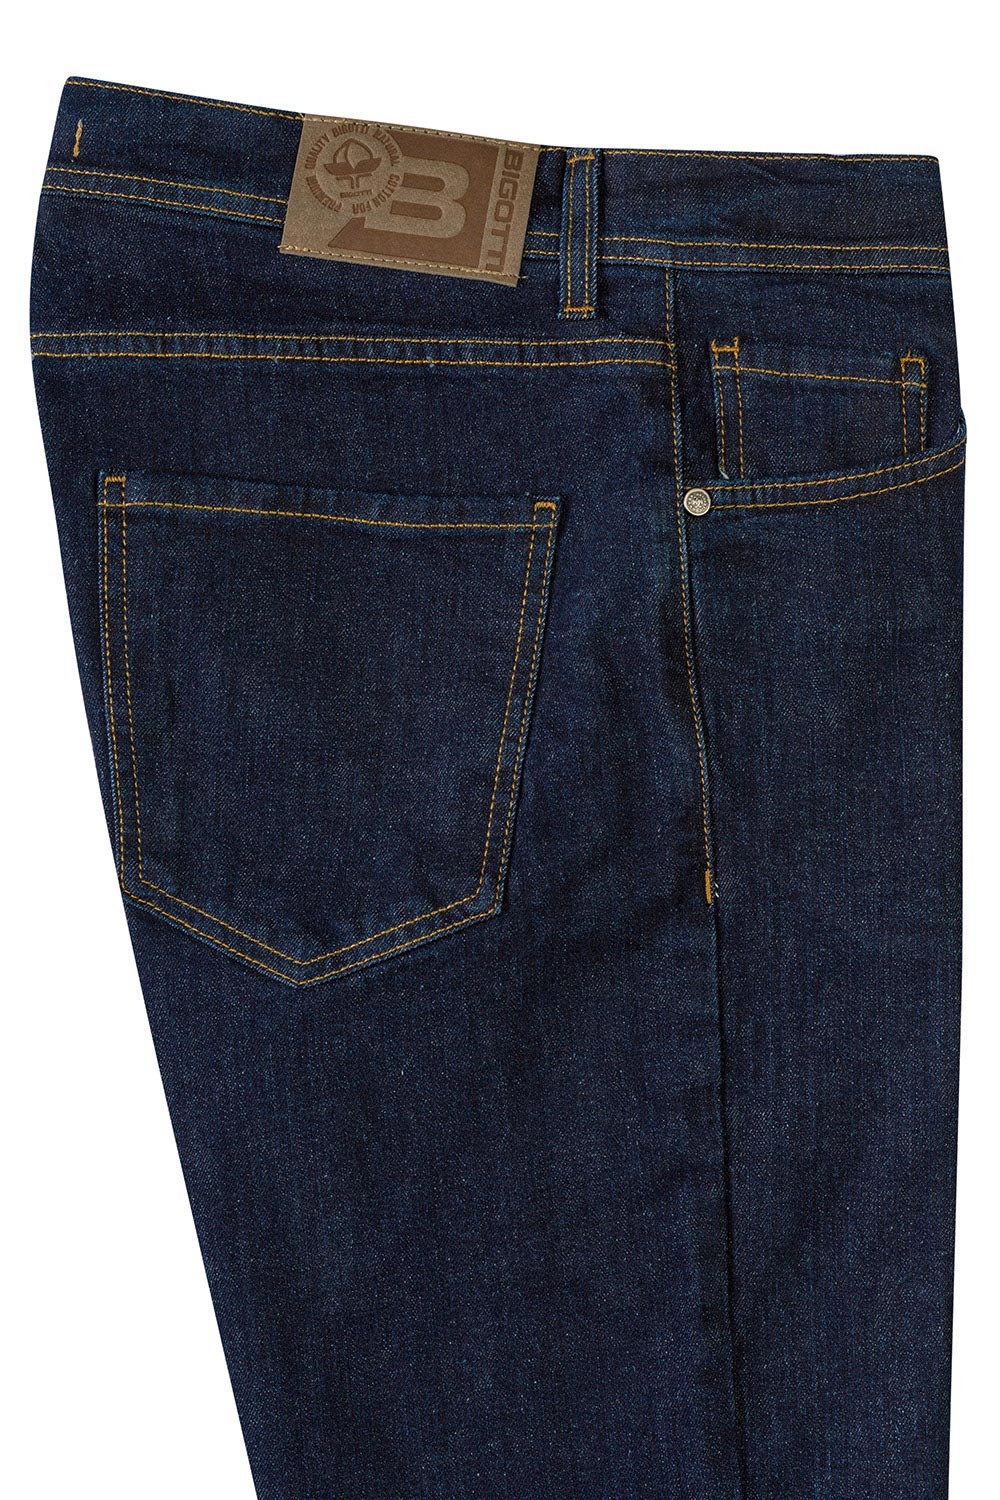 Navy jeans 1